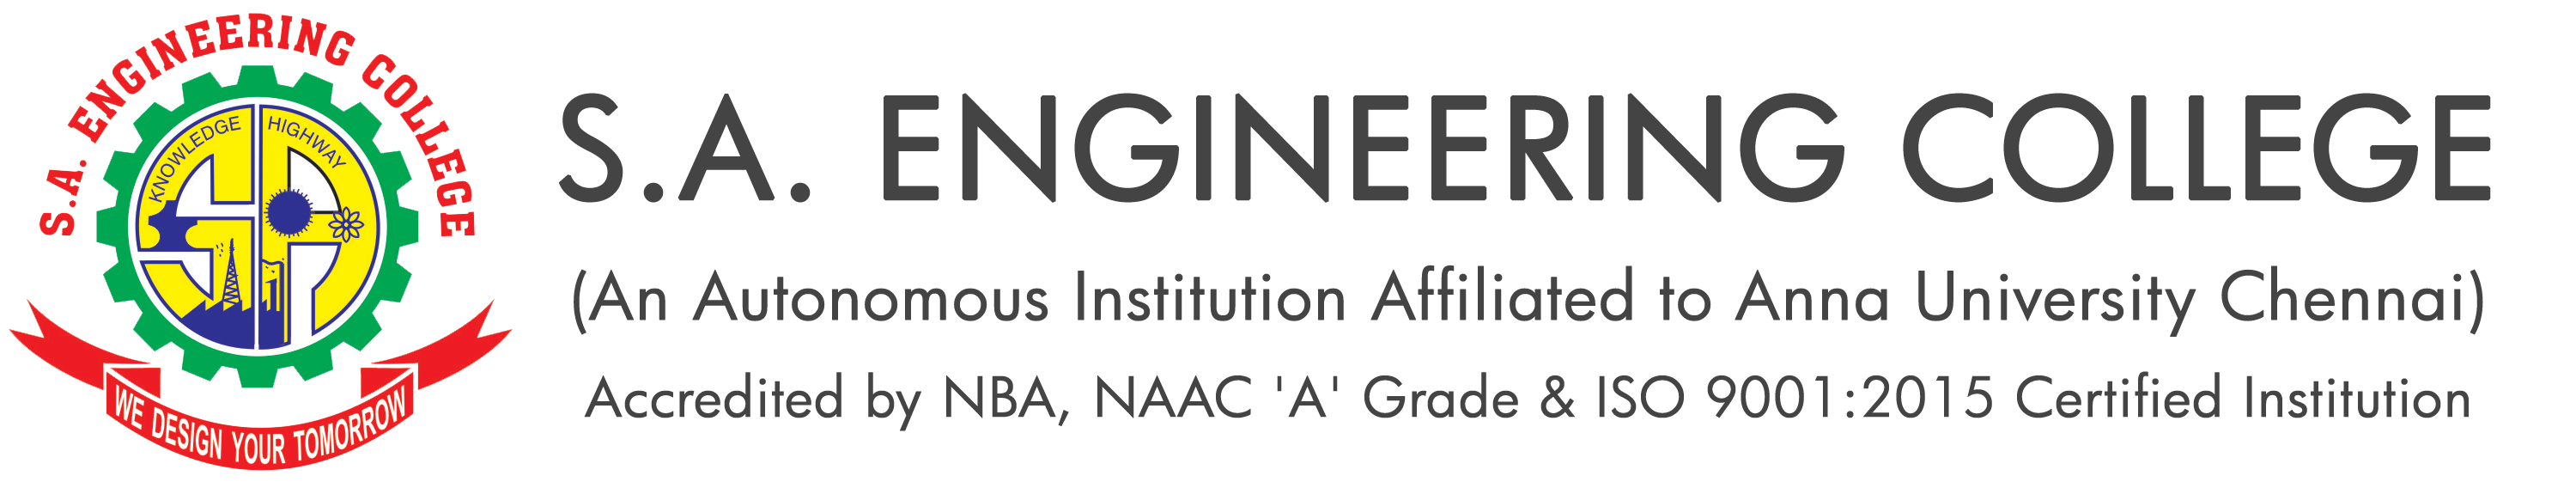 SAEC. | S.A. Engineering College (Autonomous)